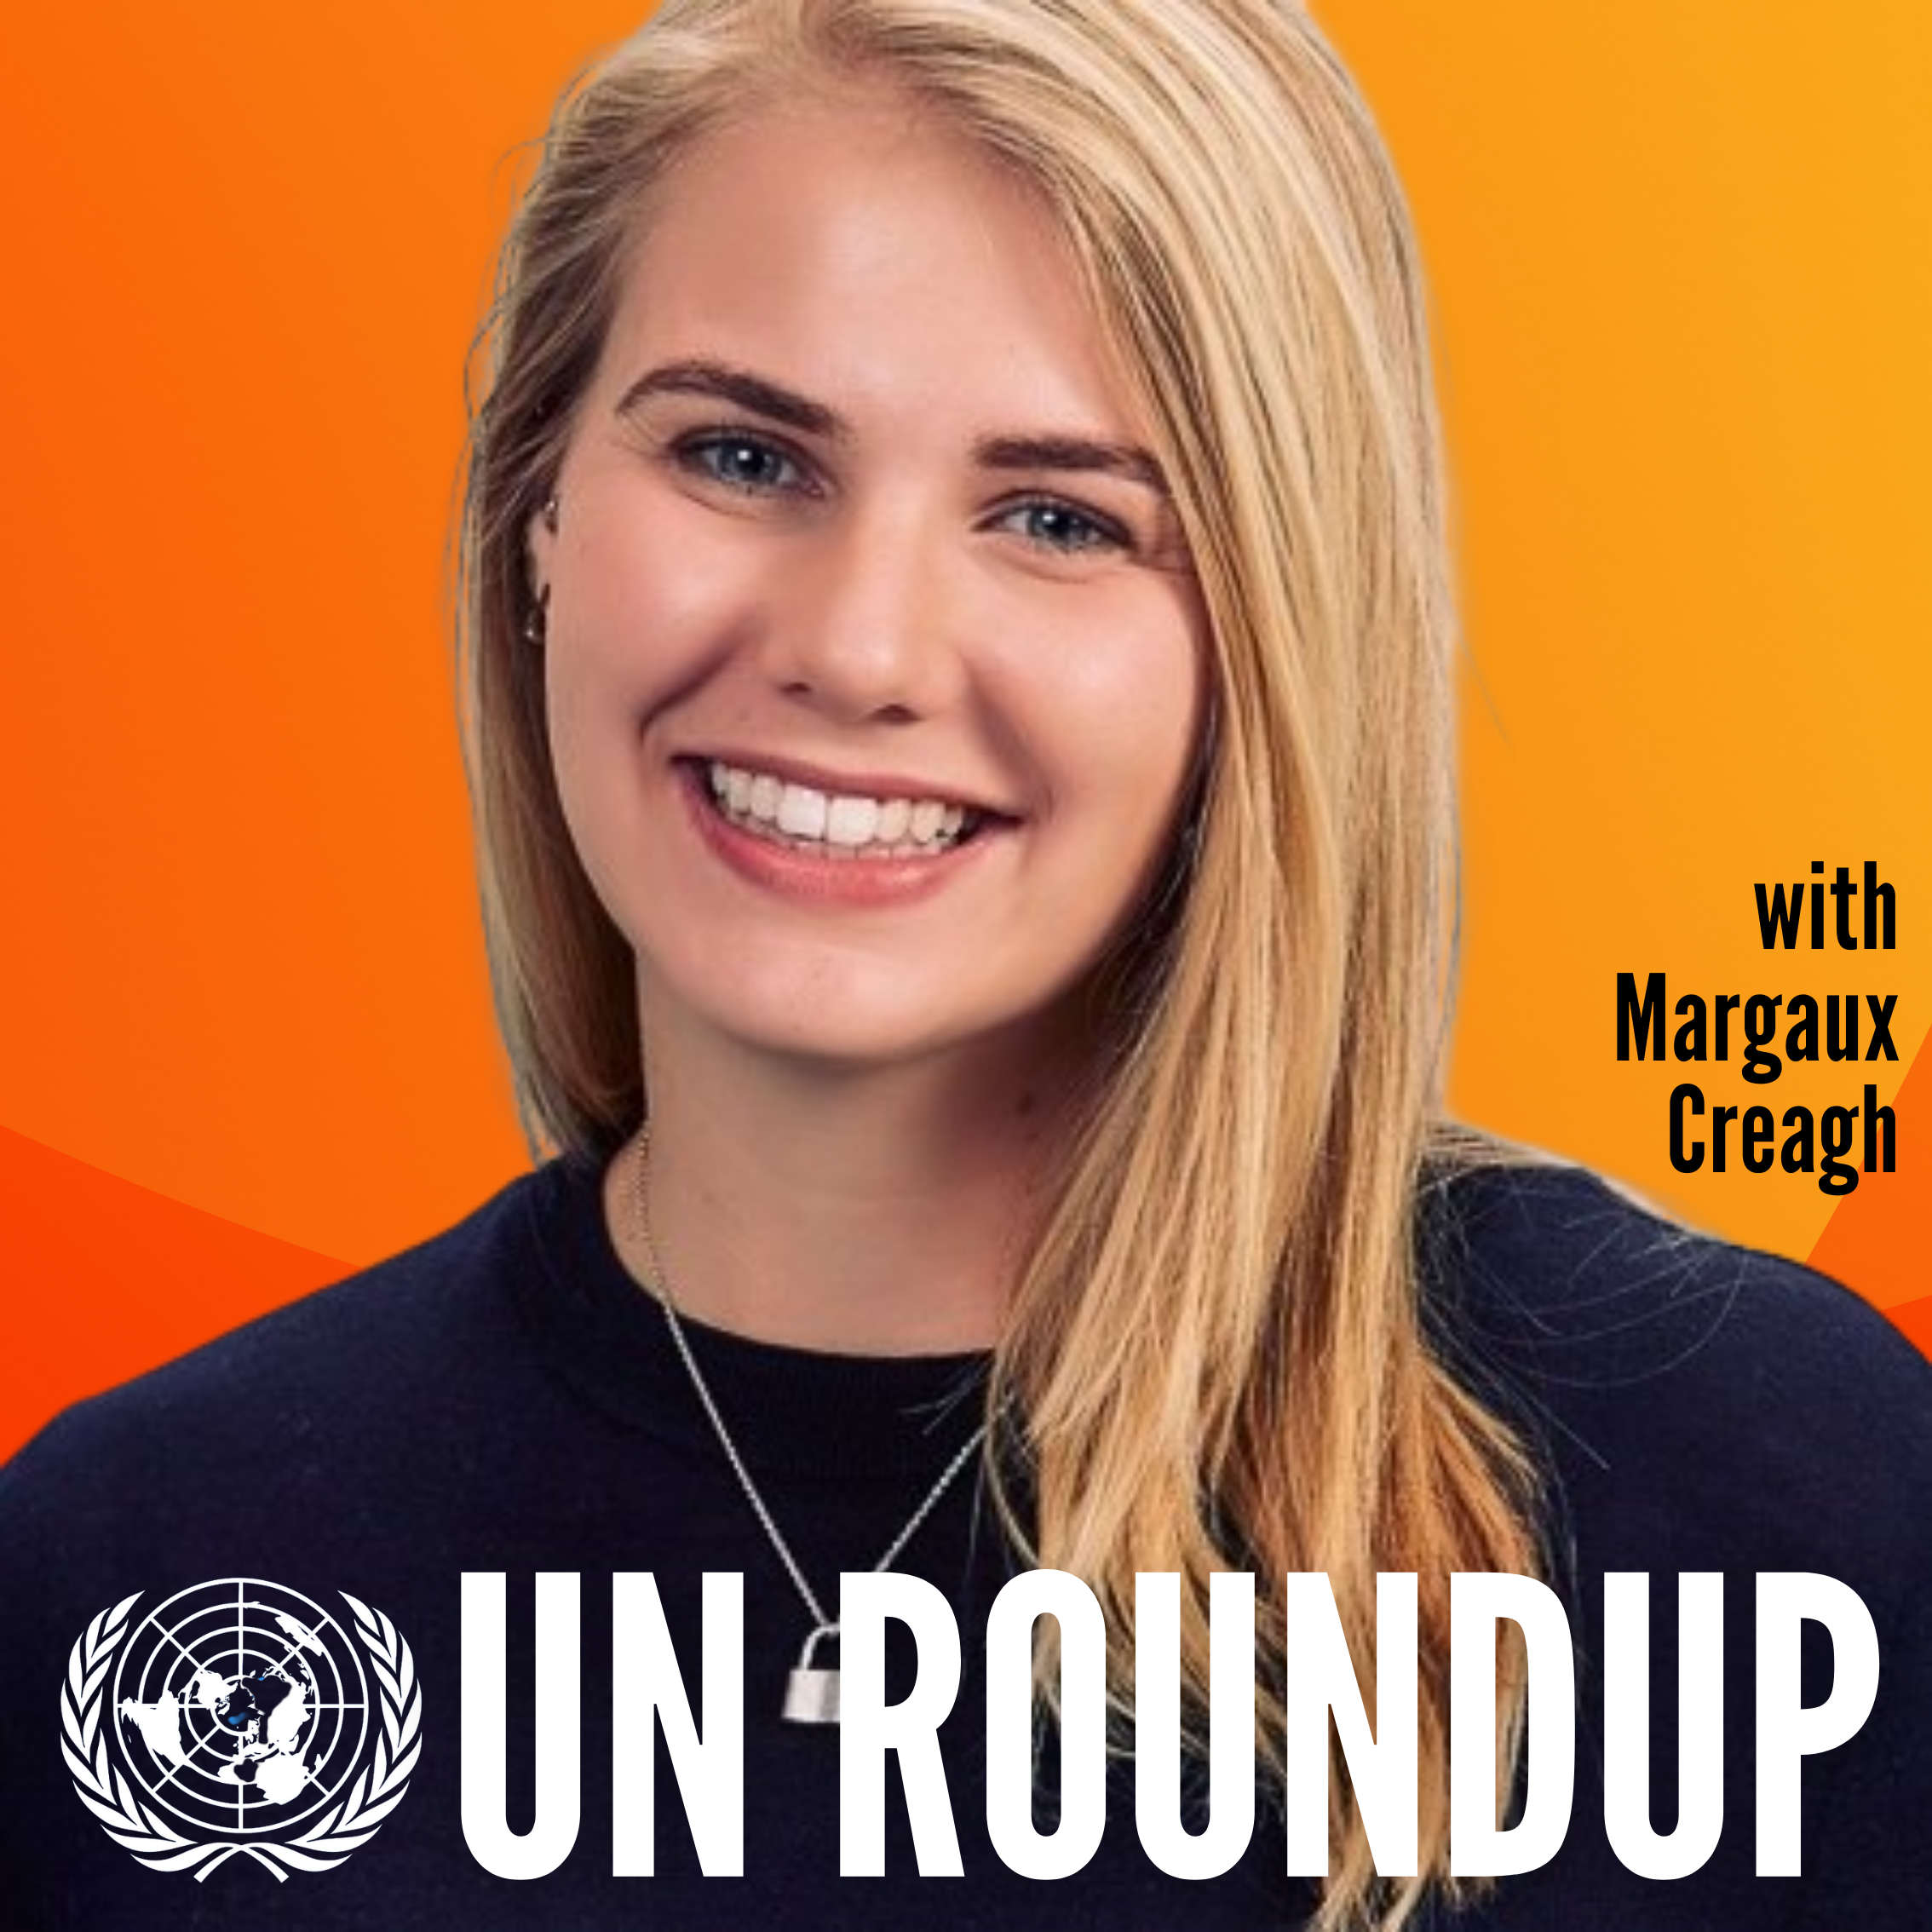 UN Roundup